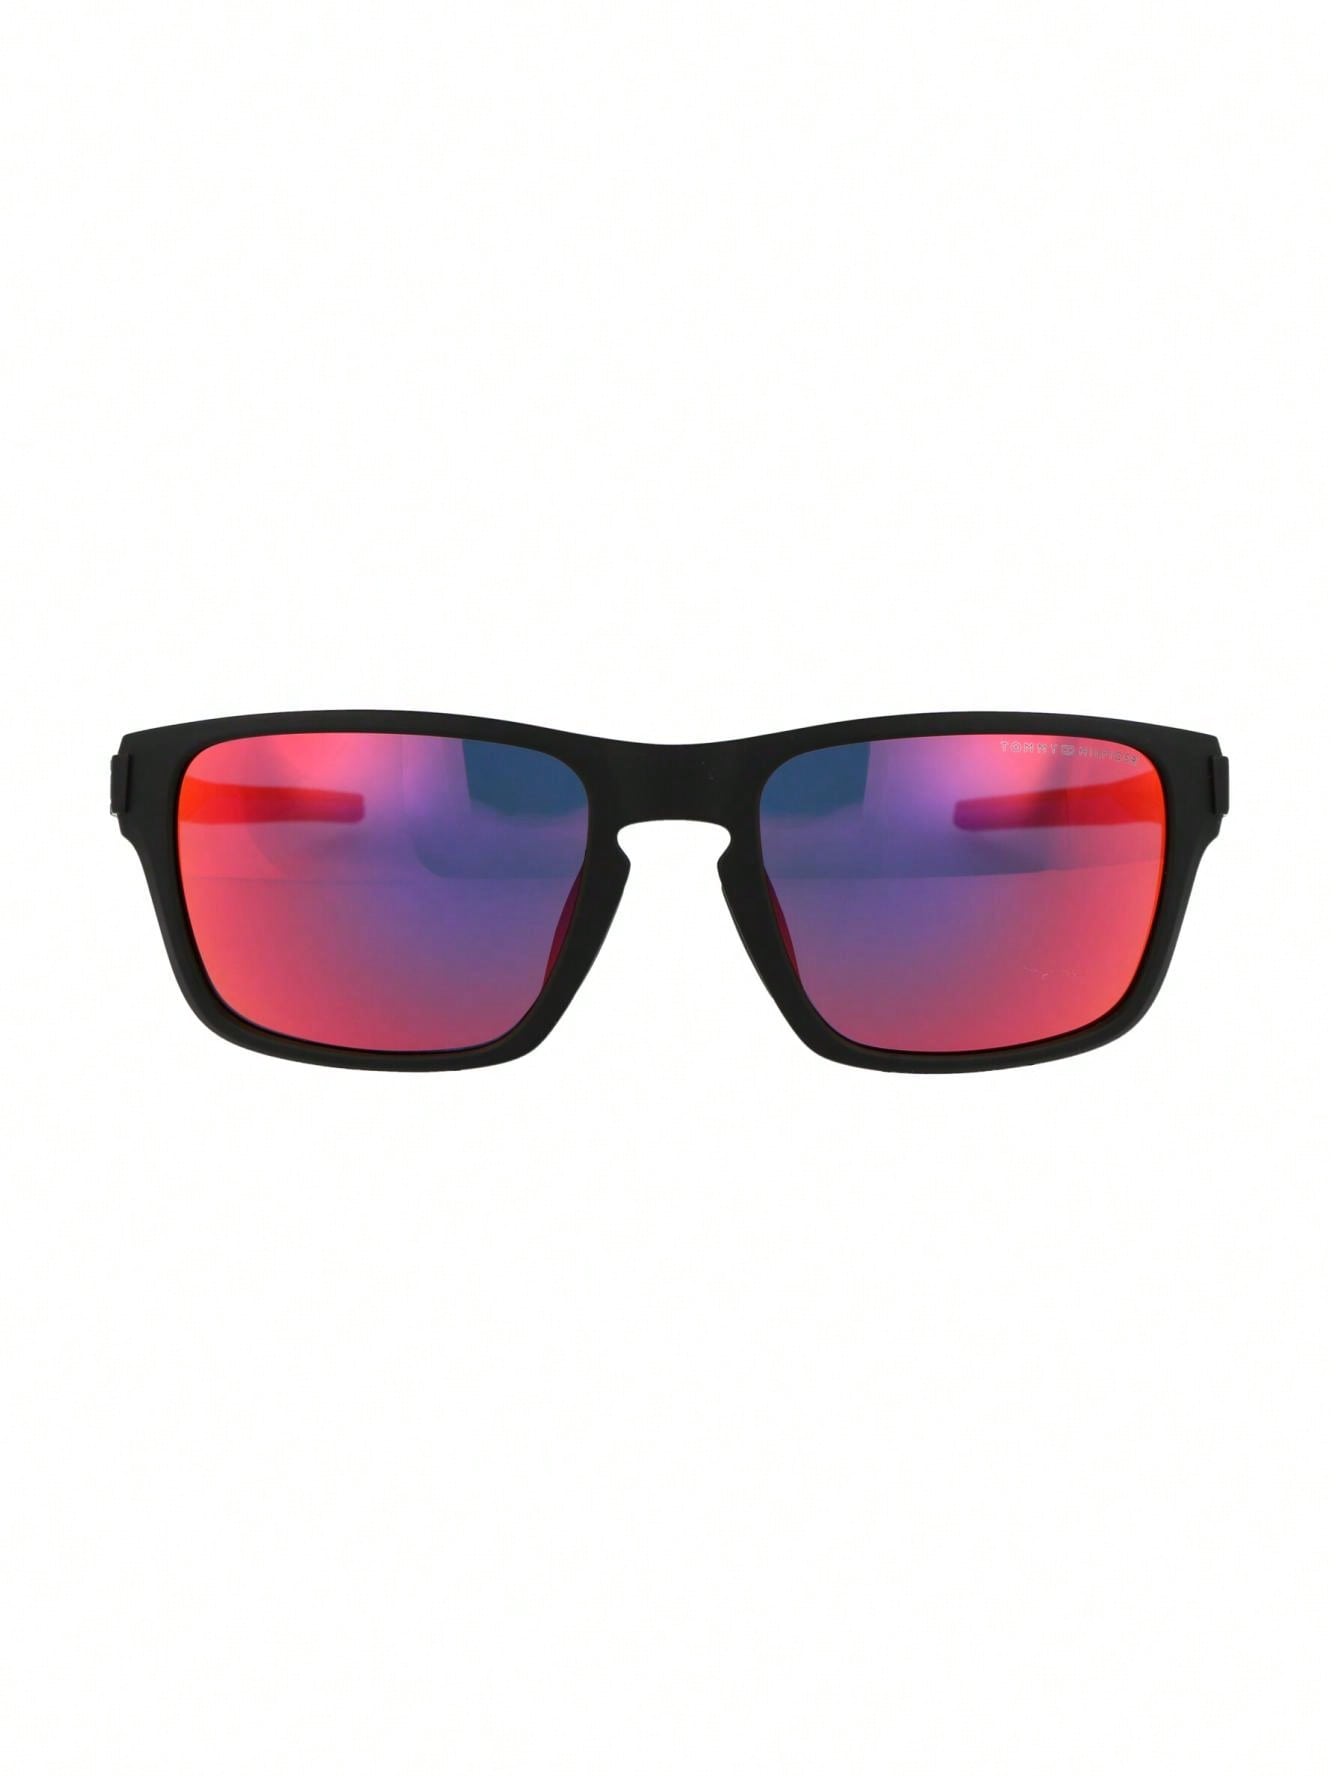 Мужские солнцезащитные очки Tommy Hilfiger DECOR TH1952S0VKPL, многоцветный солнцезащитные очки tommy hilfiger фиолетовый синий